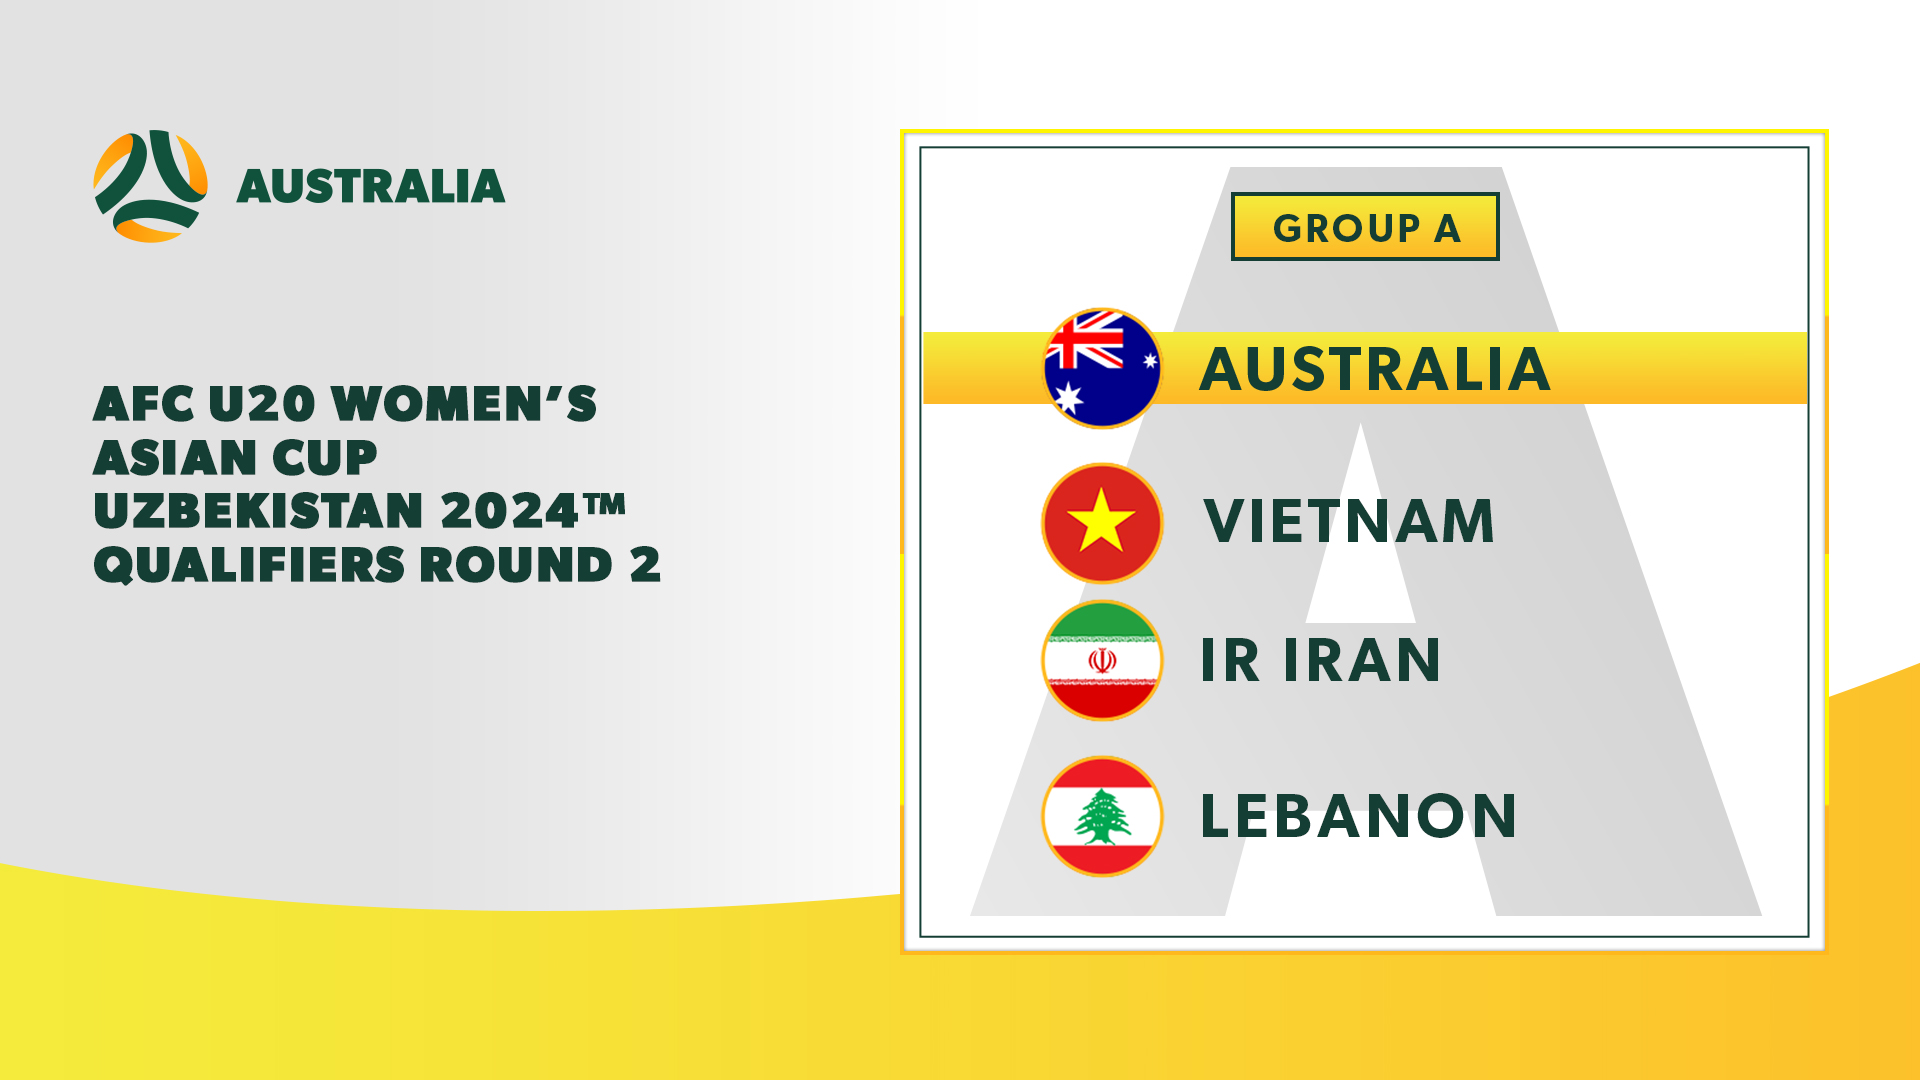 Australia's AFC U20 Women’s Asian Cup Uzbekistan 2024™ Qualifying Group